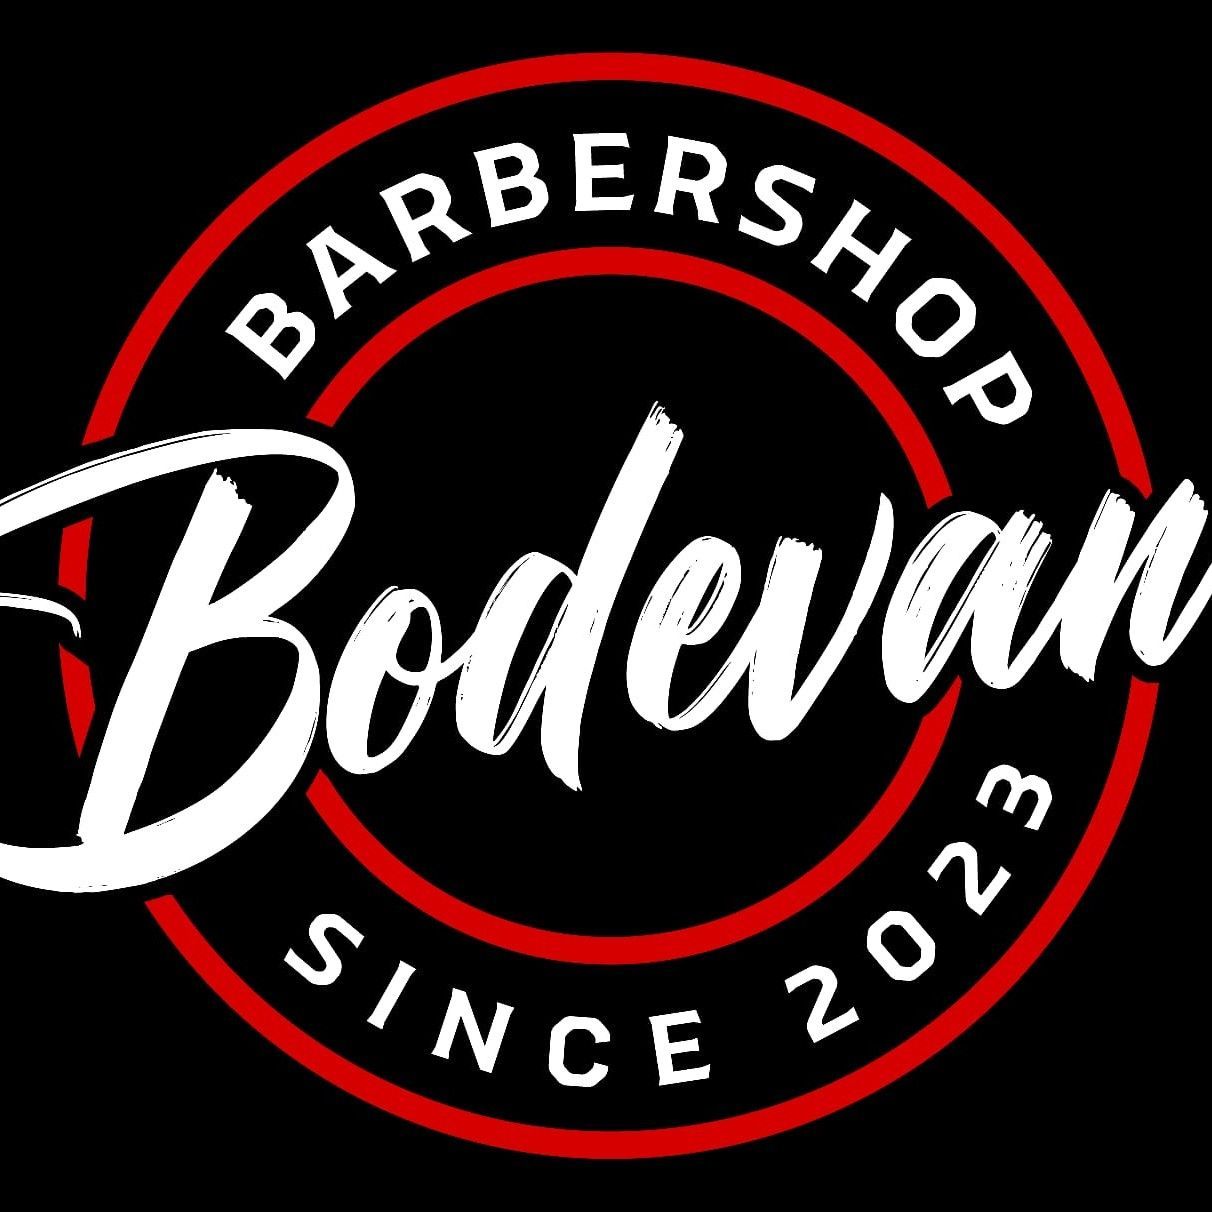 Barbearia Bodevan 💈✂️, Rua Santo Antônio, N° 195, 31741-150, Belo Horizonte